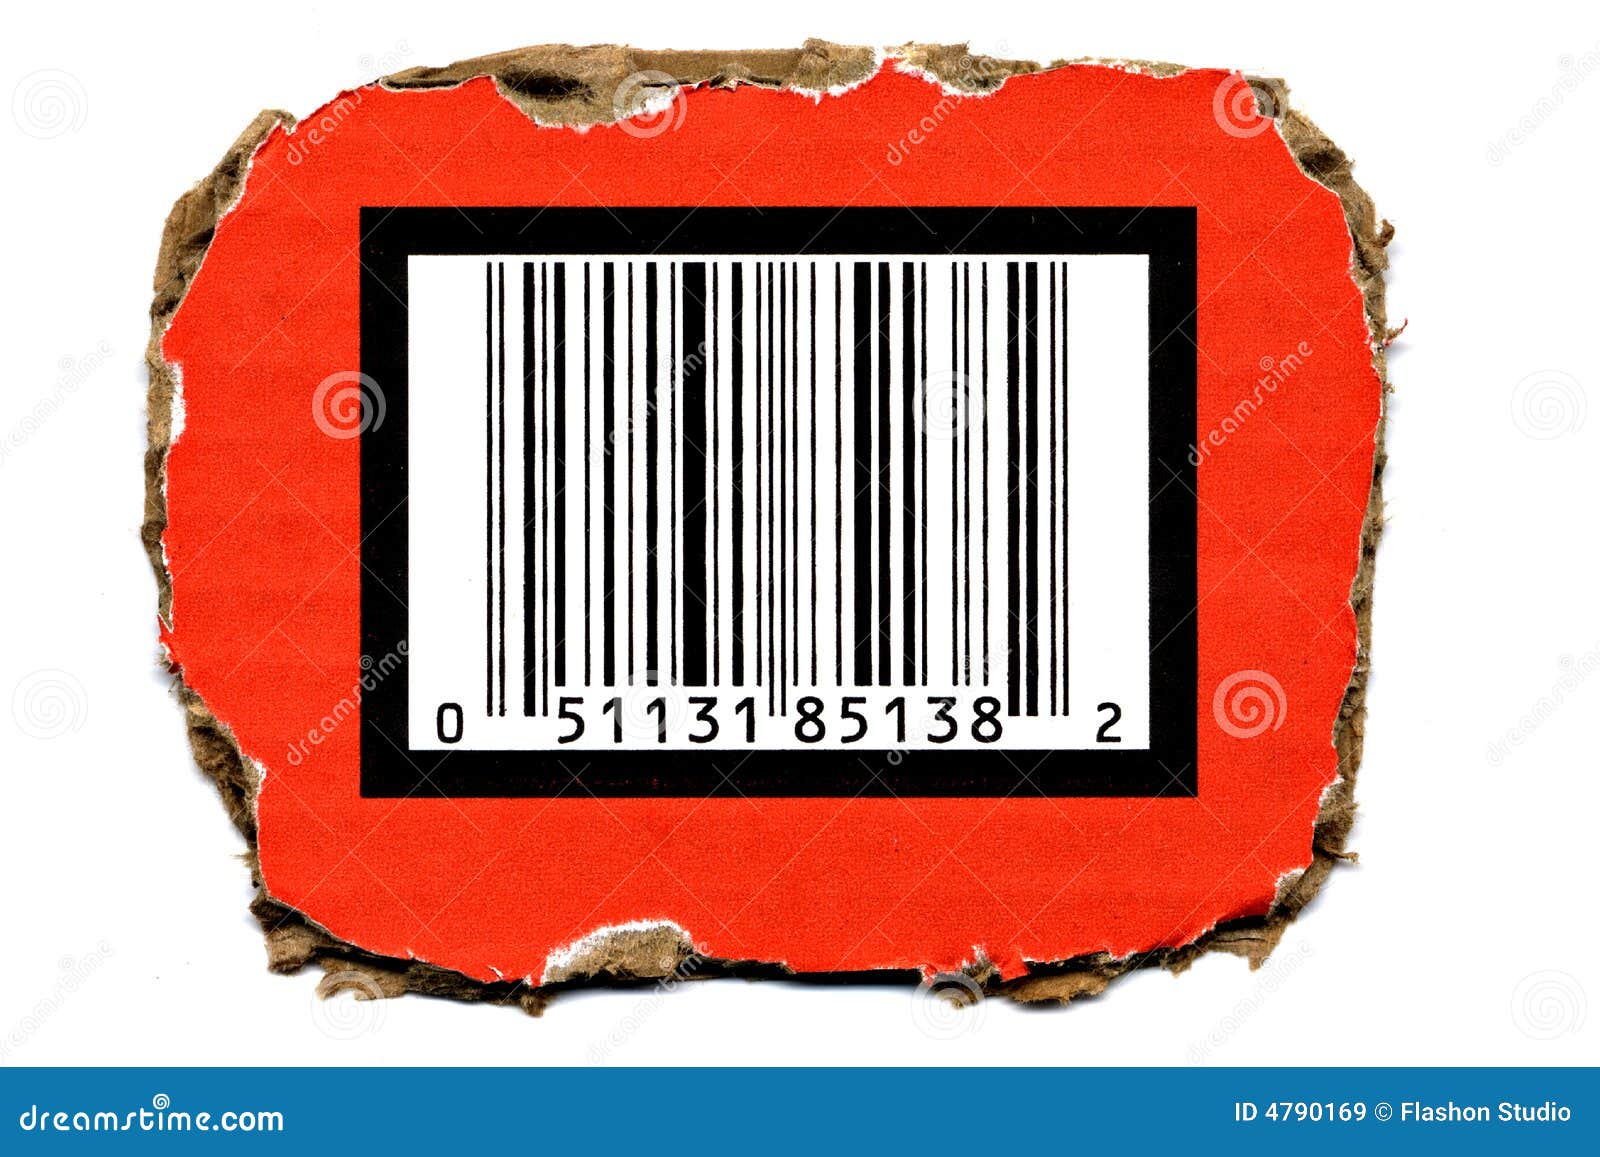 Blank Price Tag with Fake Bar Code Stock Image - Image of cardboard, macro:  5410463